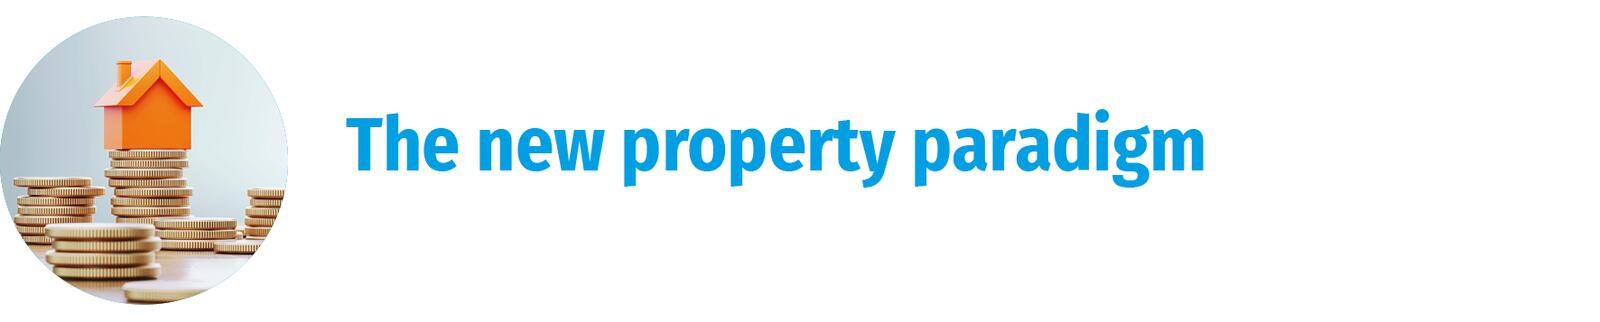 The new property paradigm w